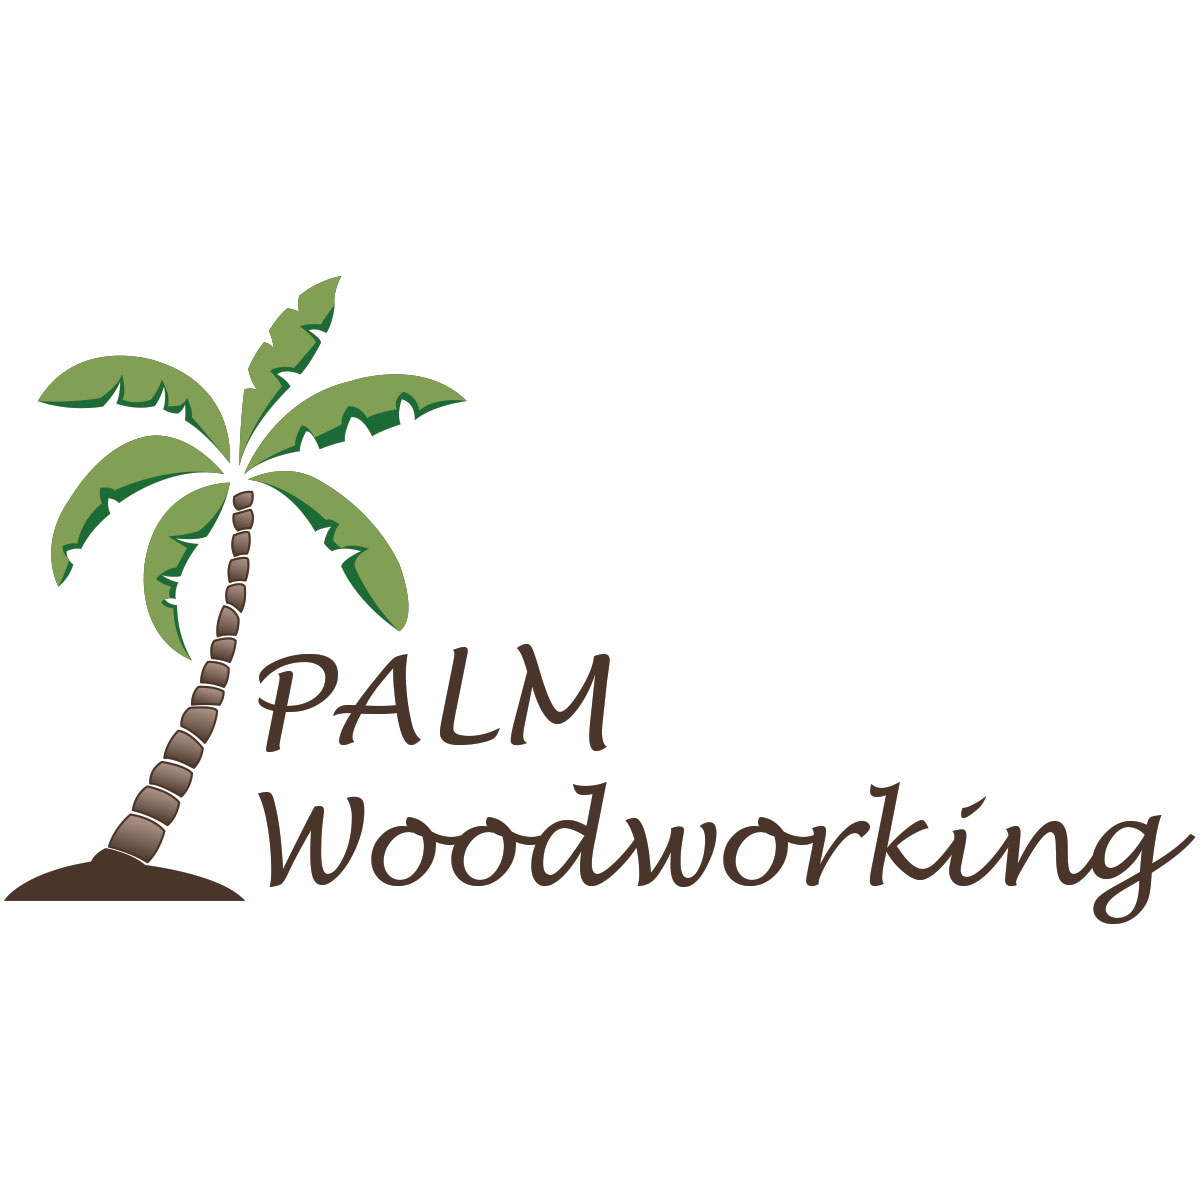 Palm Woodworking logo